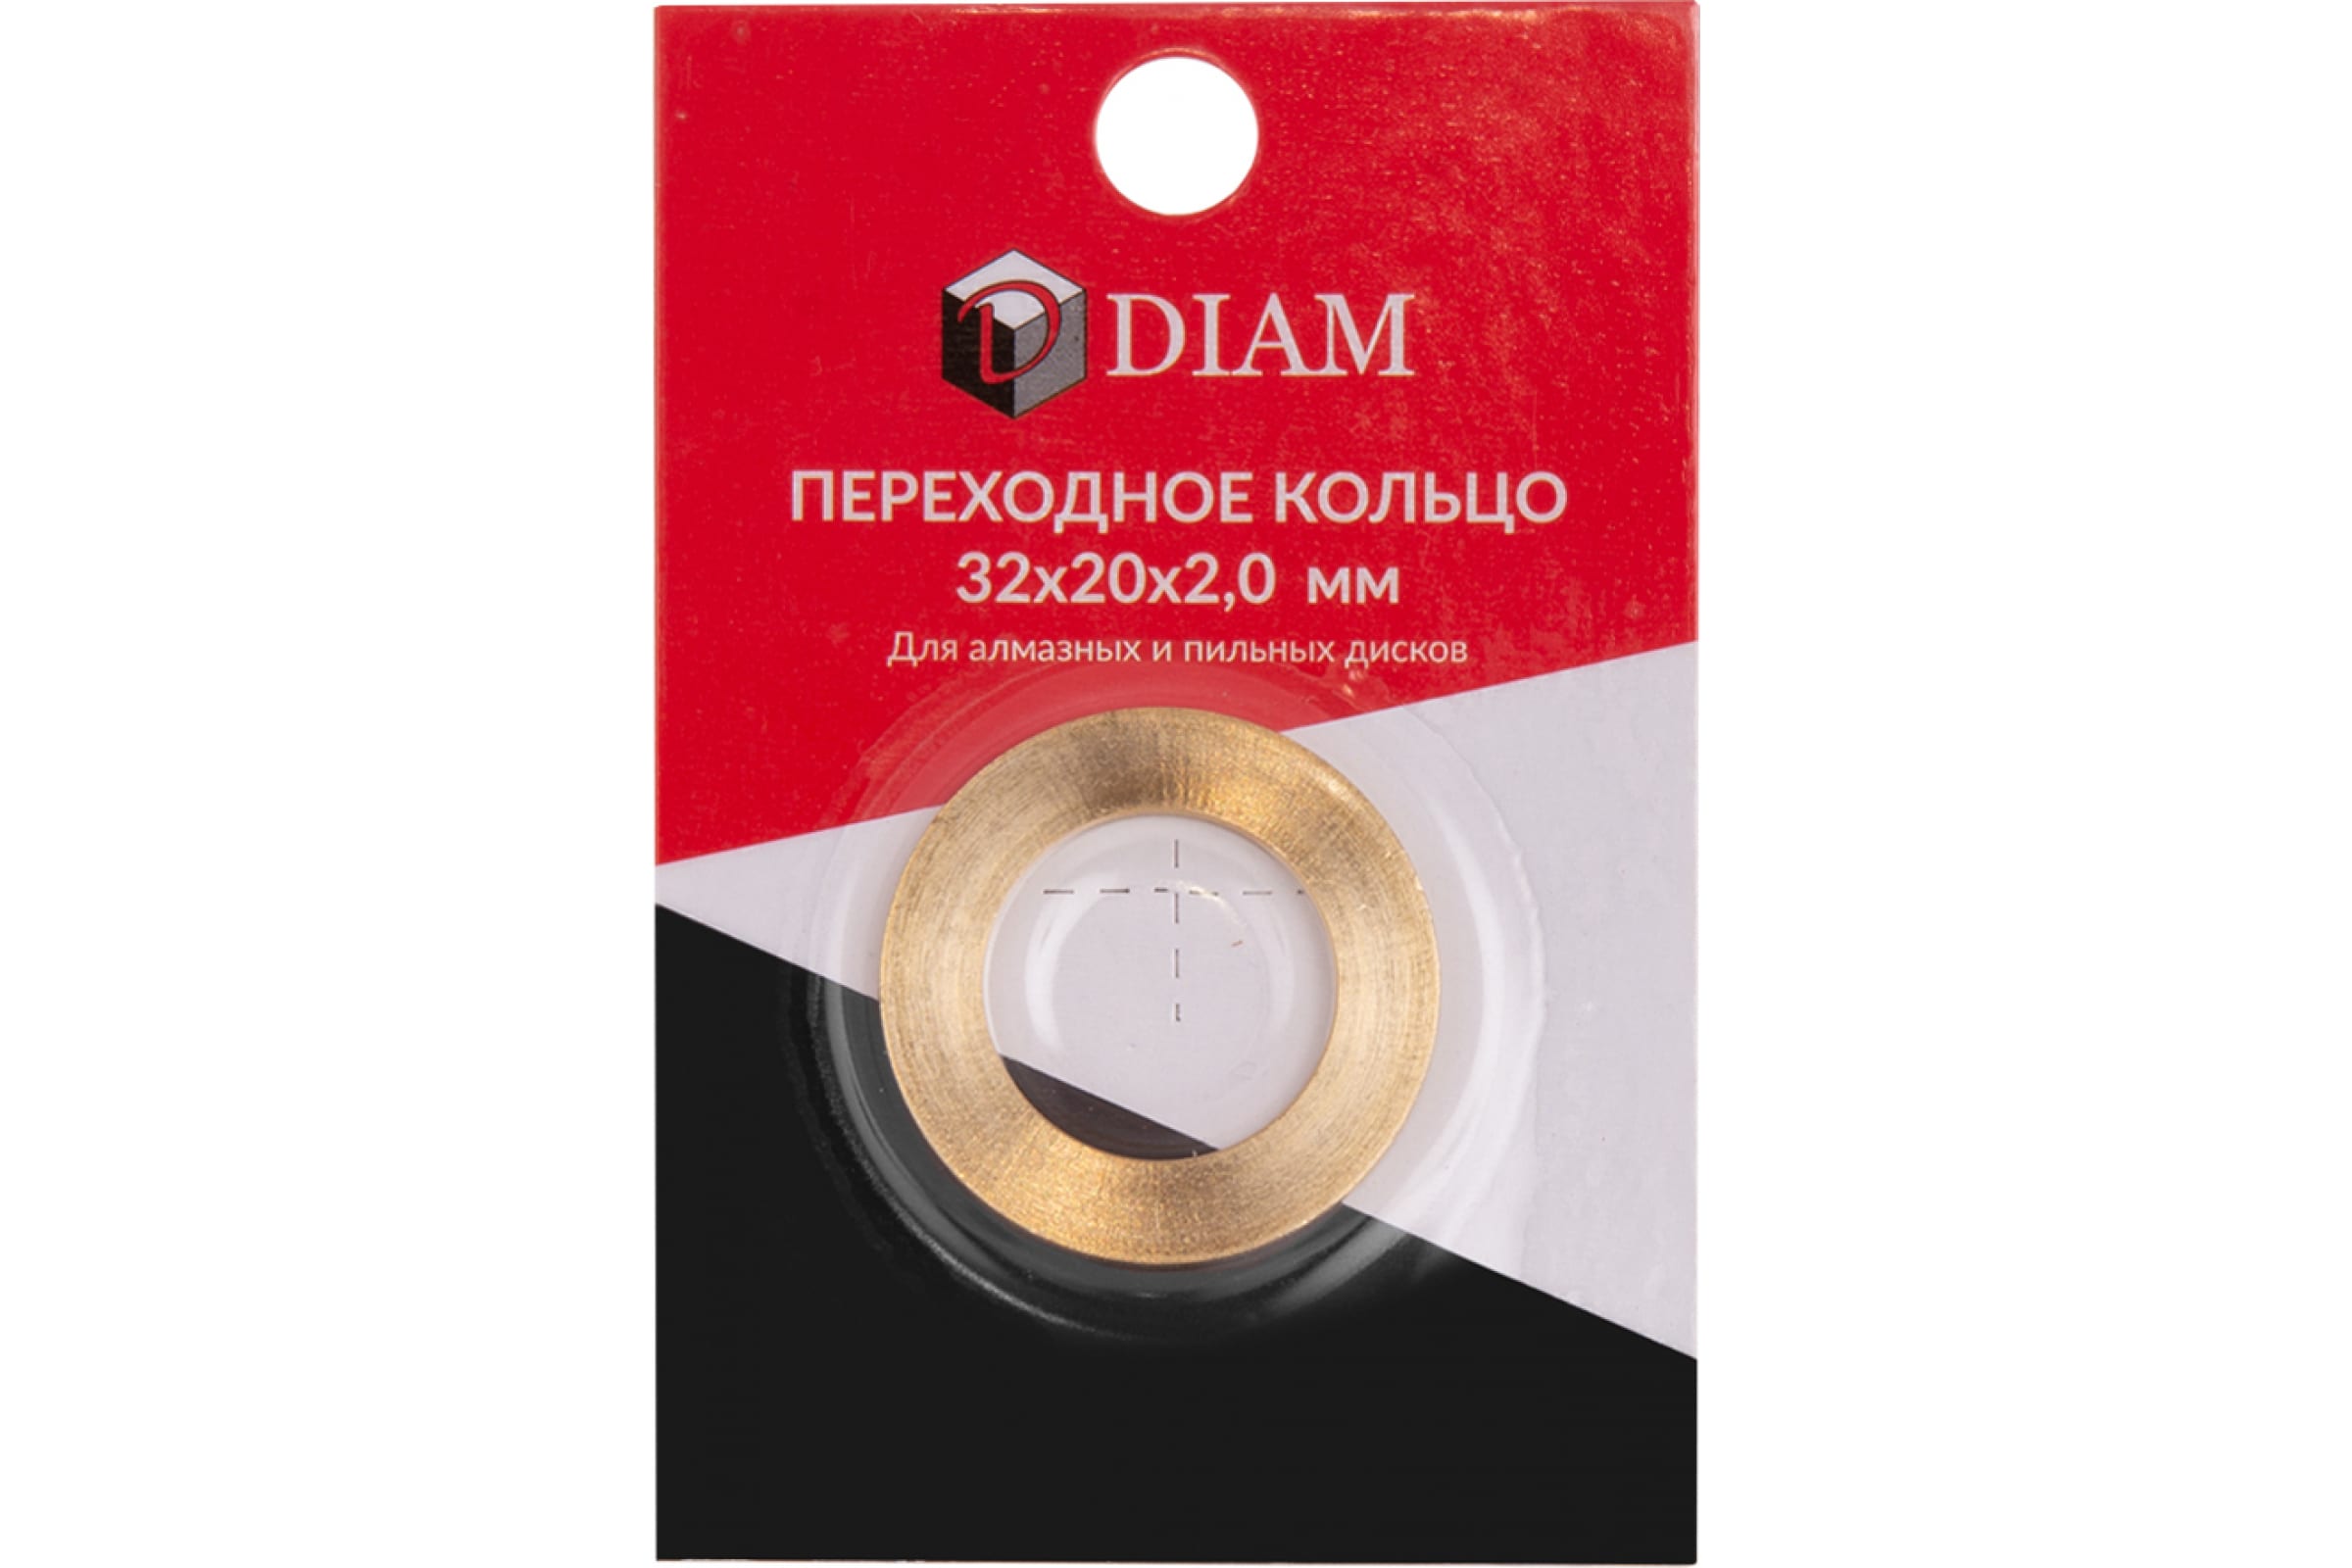 DIAM Переходное кольцо 32х20х2,0 640085 переходное кольцо general fittings